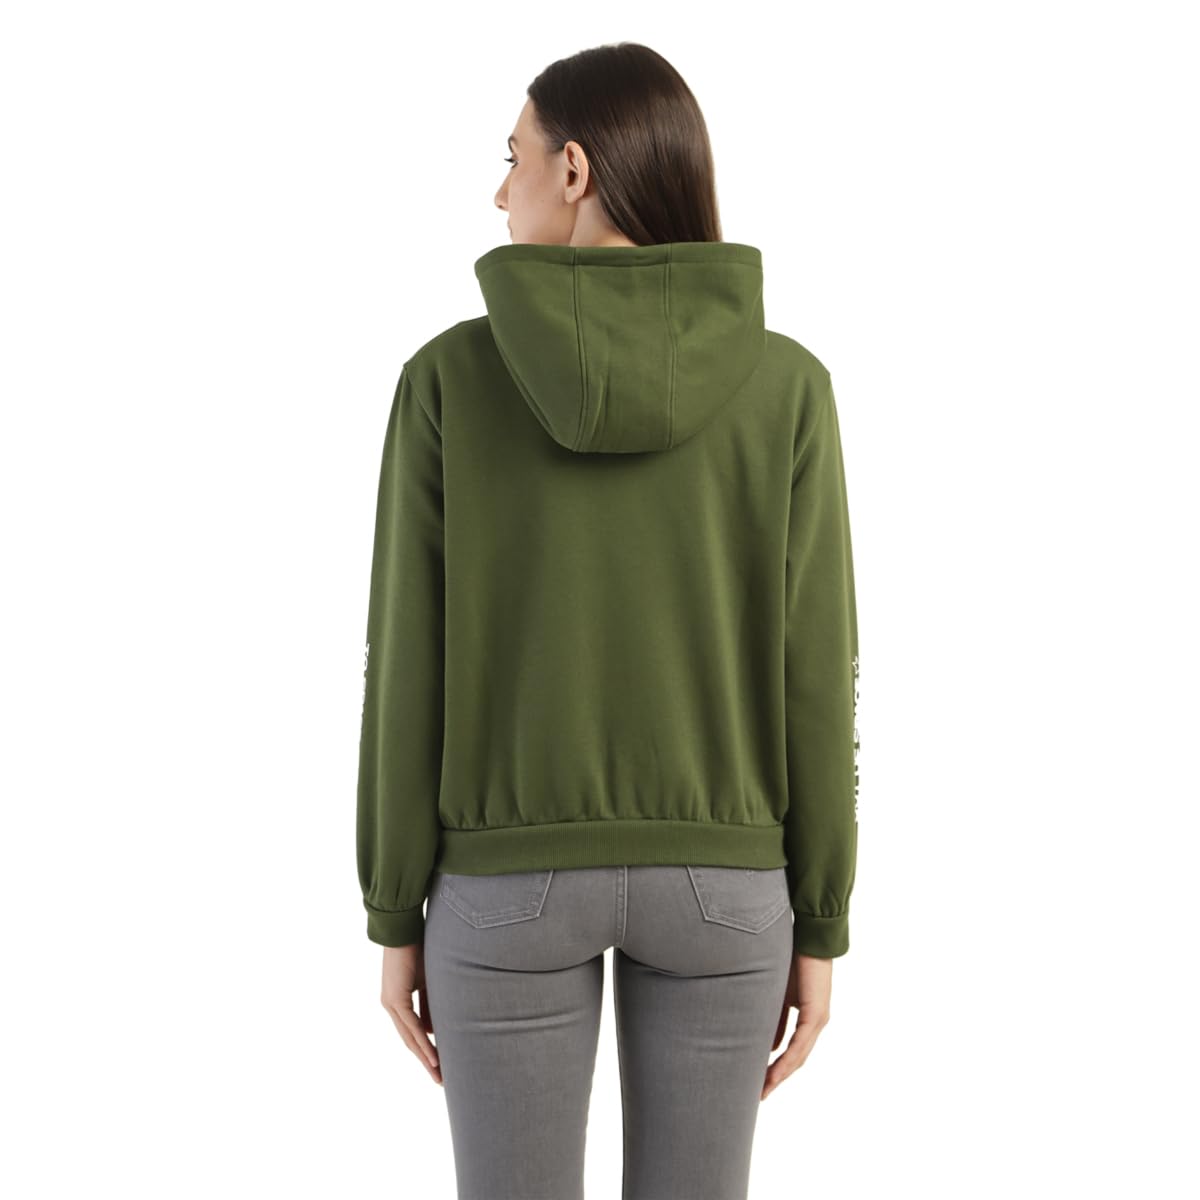 Levi's Women's Alphanumeric Print Green Hooded Sweatshirt